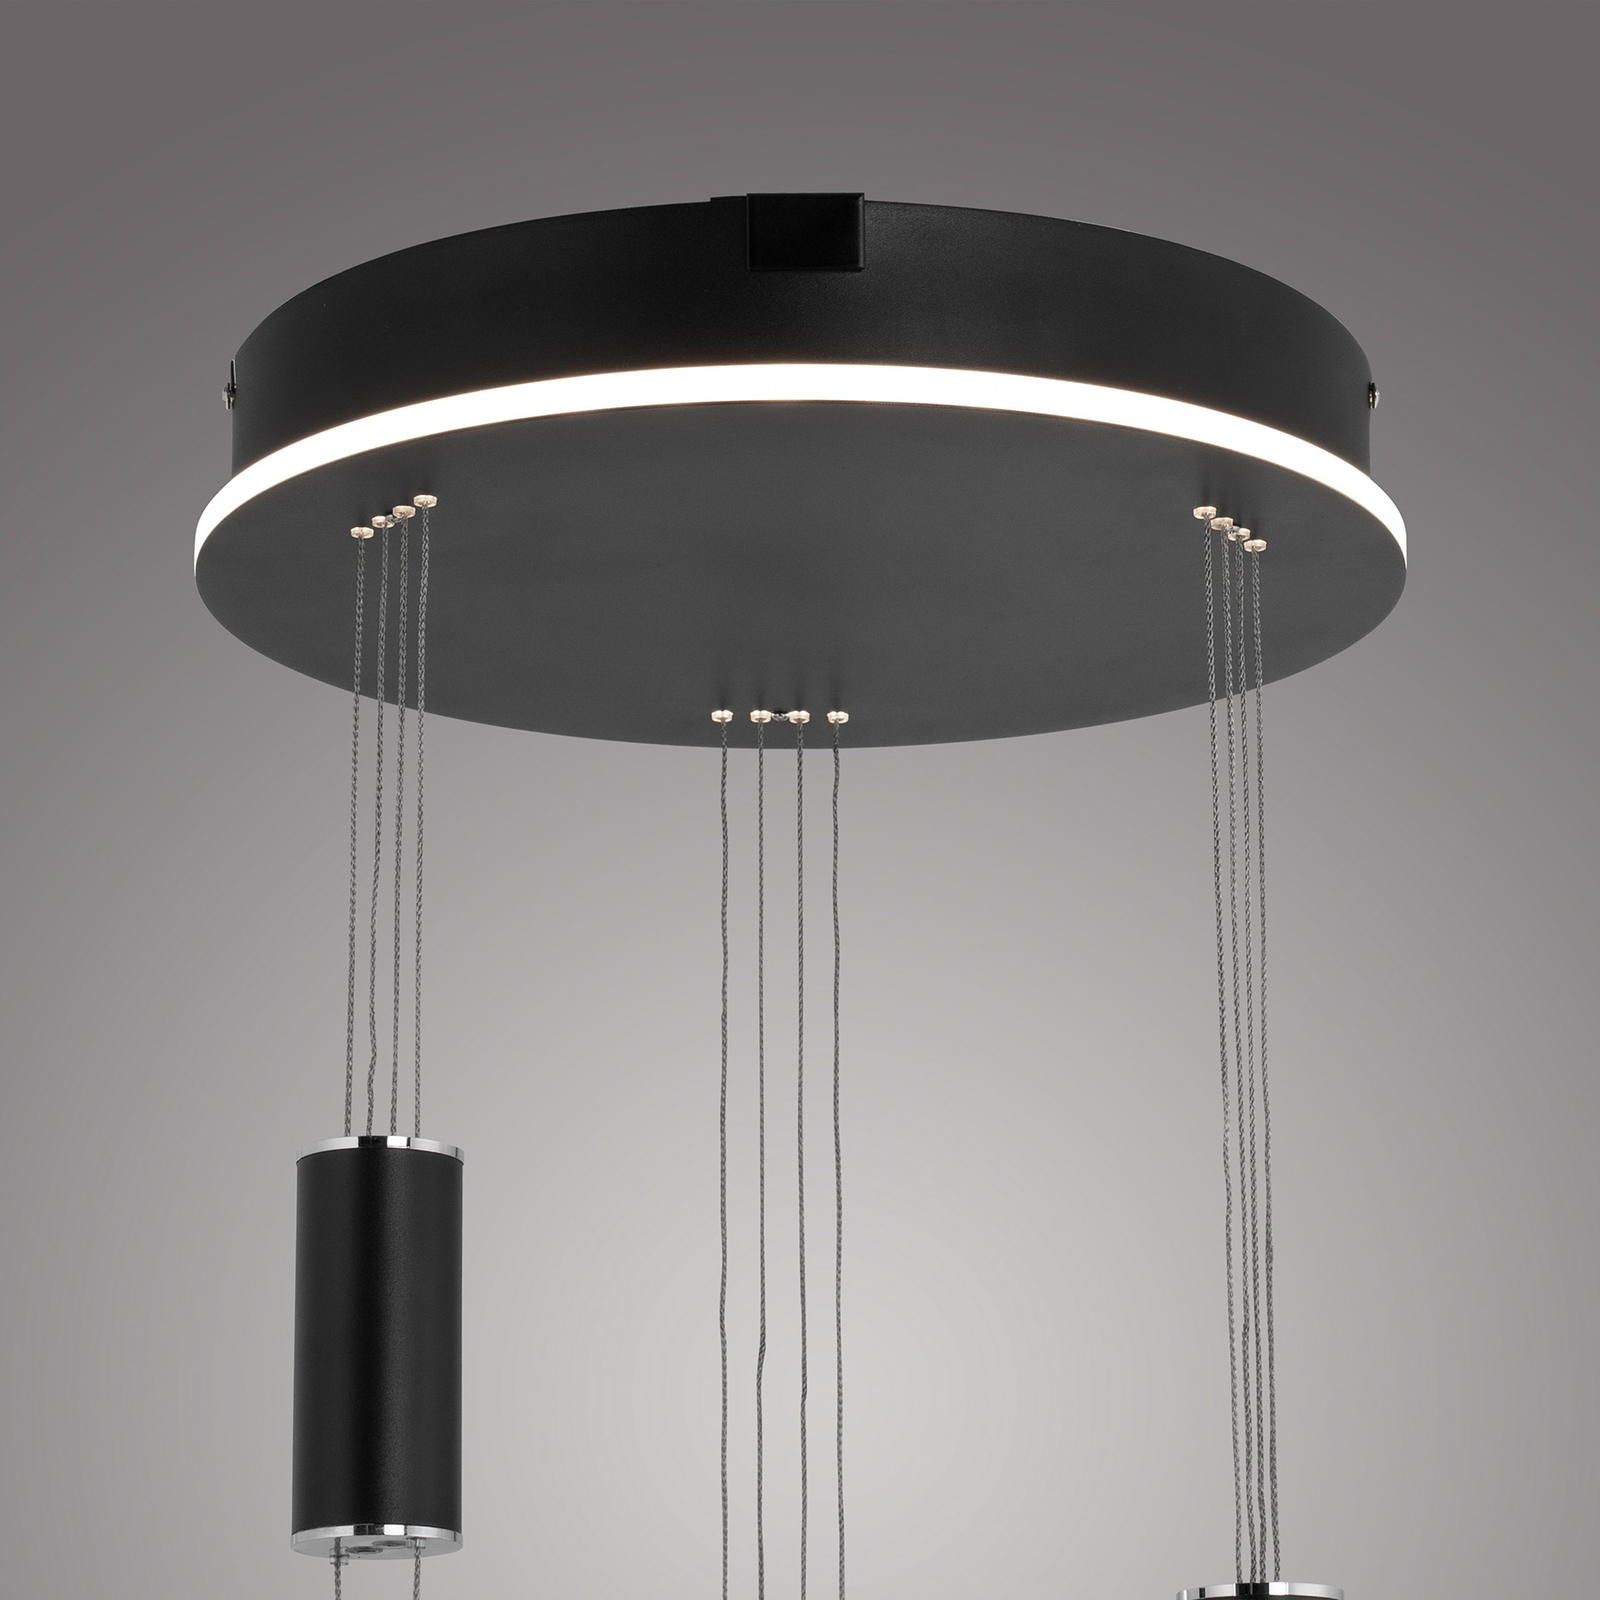 Paul Neuhaus Q-ETIENNE hanglamp rondel, zwart